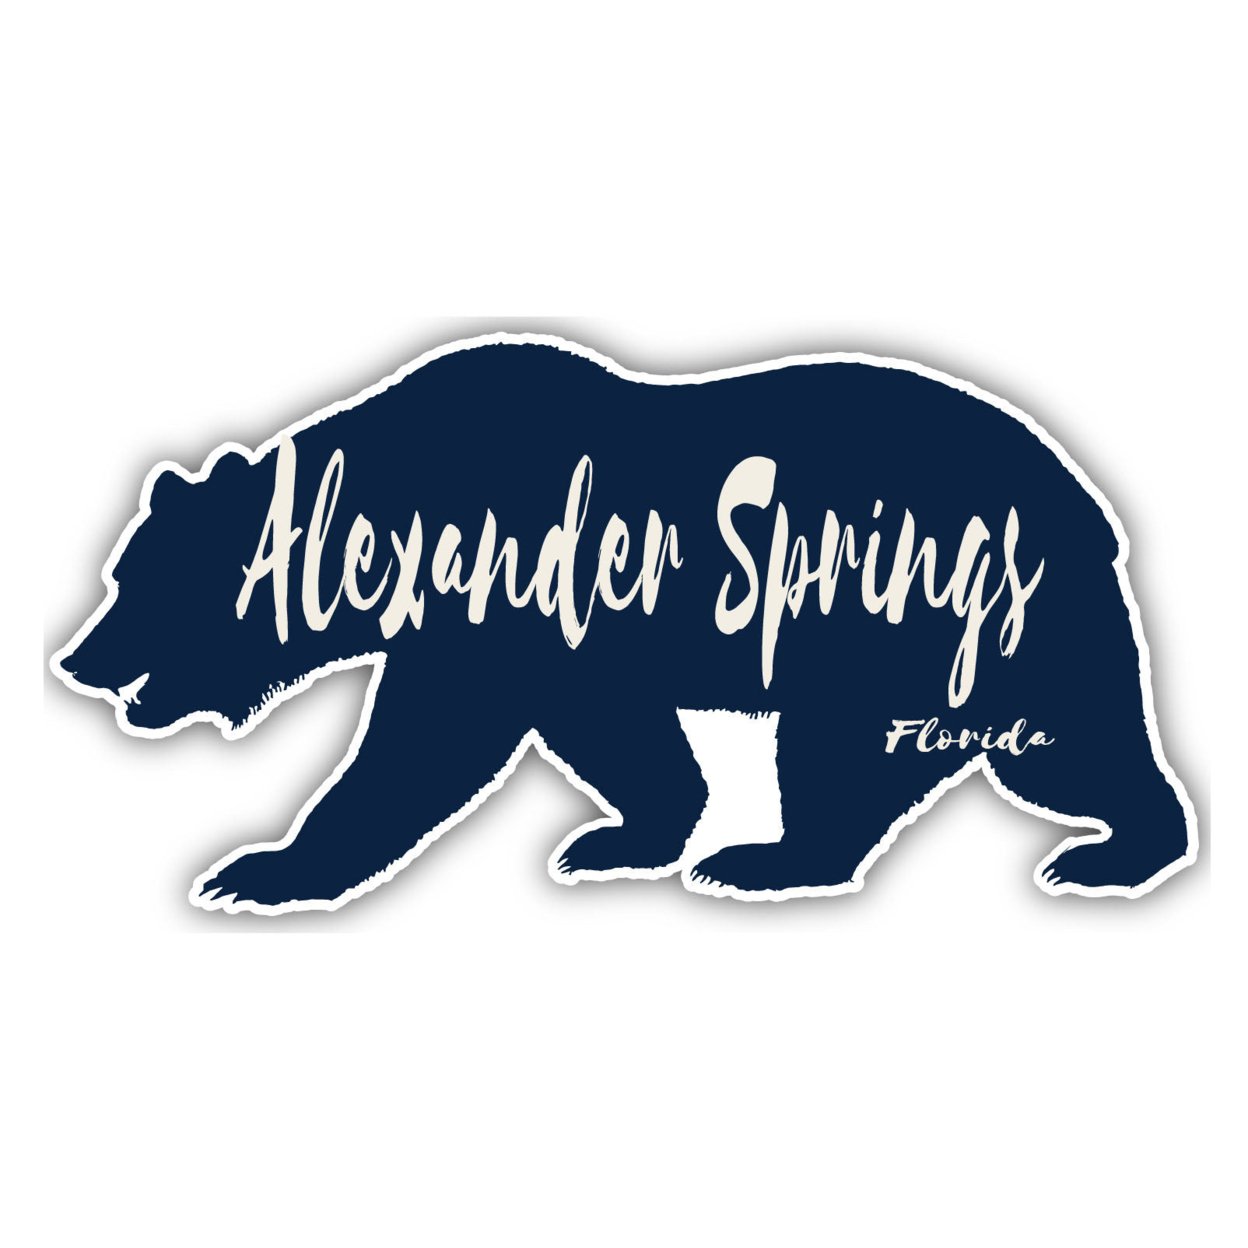 Alexander Springs Florida Souvenir Decorative Stickers (Choose Theme And Size) - Single Unit, 2-Inch, Tent